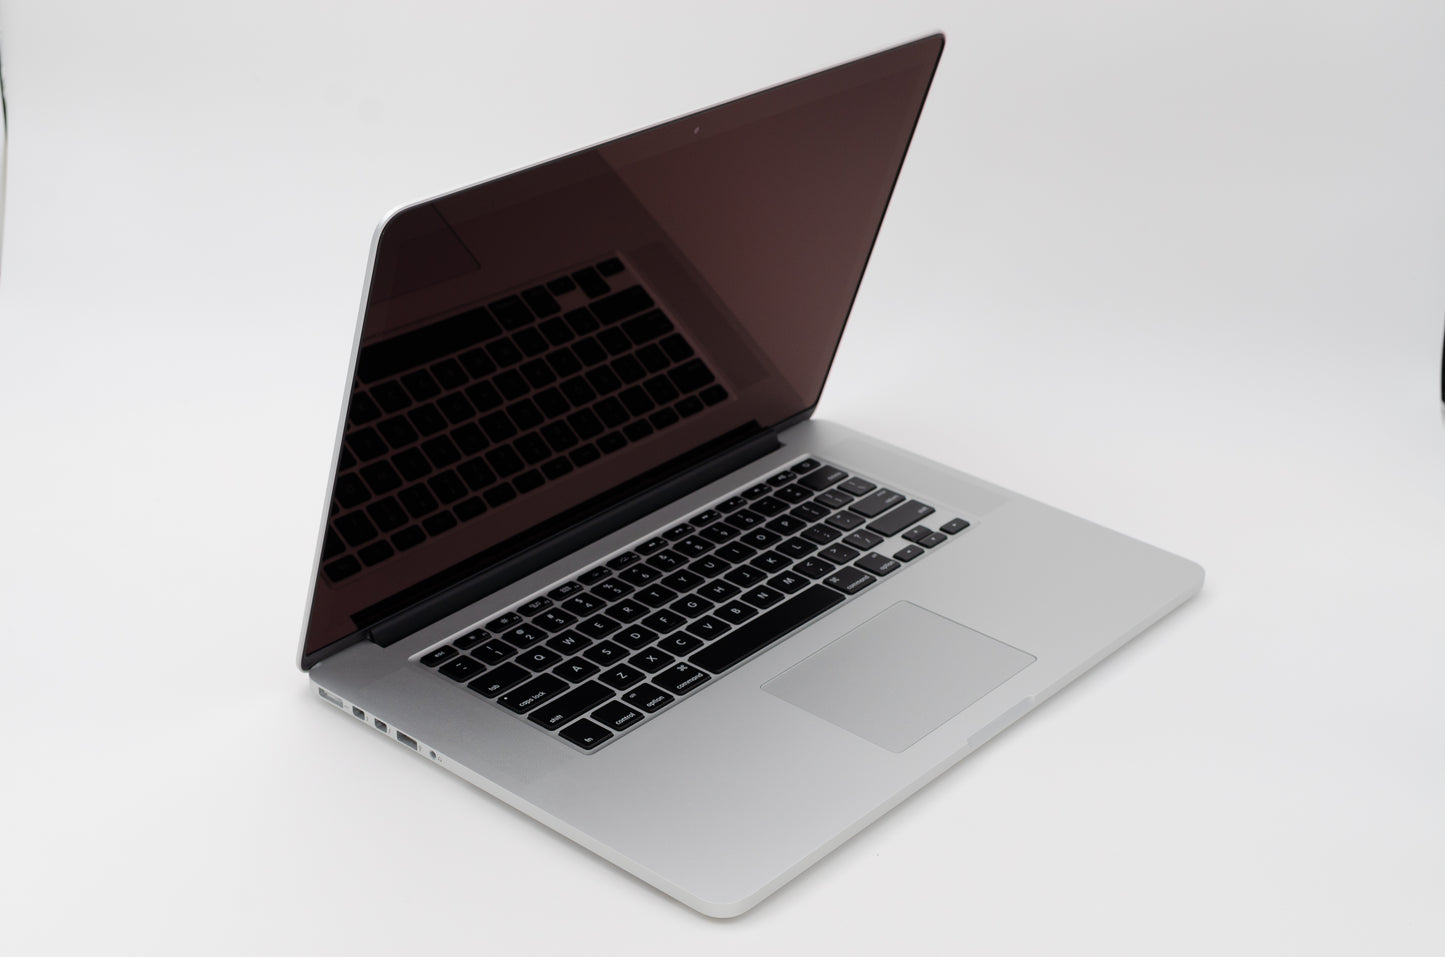 apple-mid-2010-15.4-inch-macbook-pro-a1286-aluminum-dci7 - 2.66ghz processor, 8gb ram, gt 330m - 256mb gpu-mc373ll/a-4